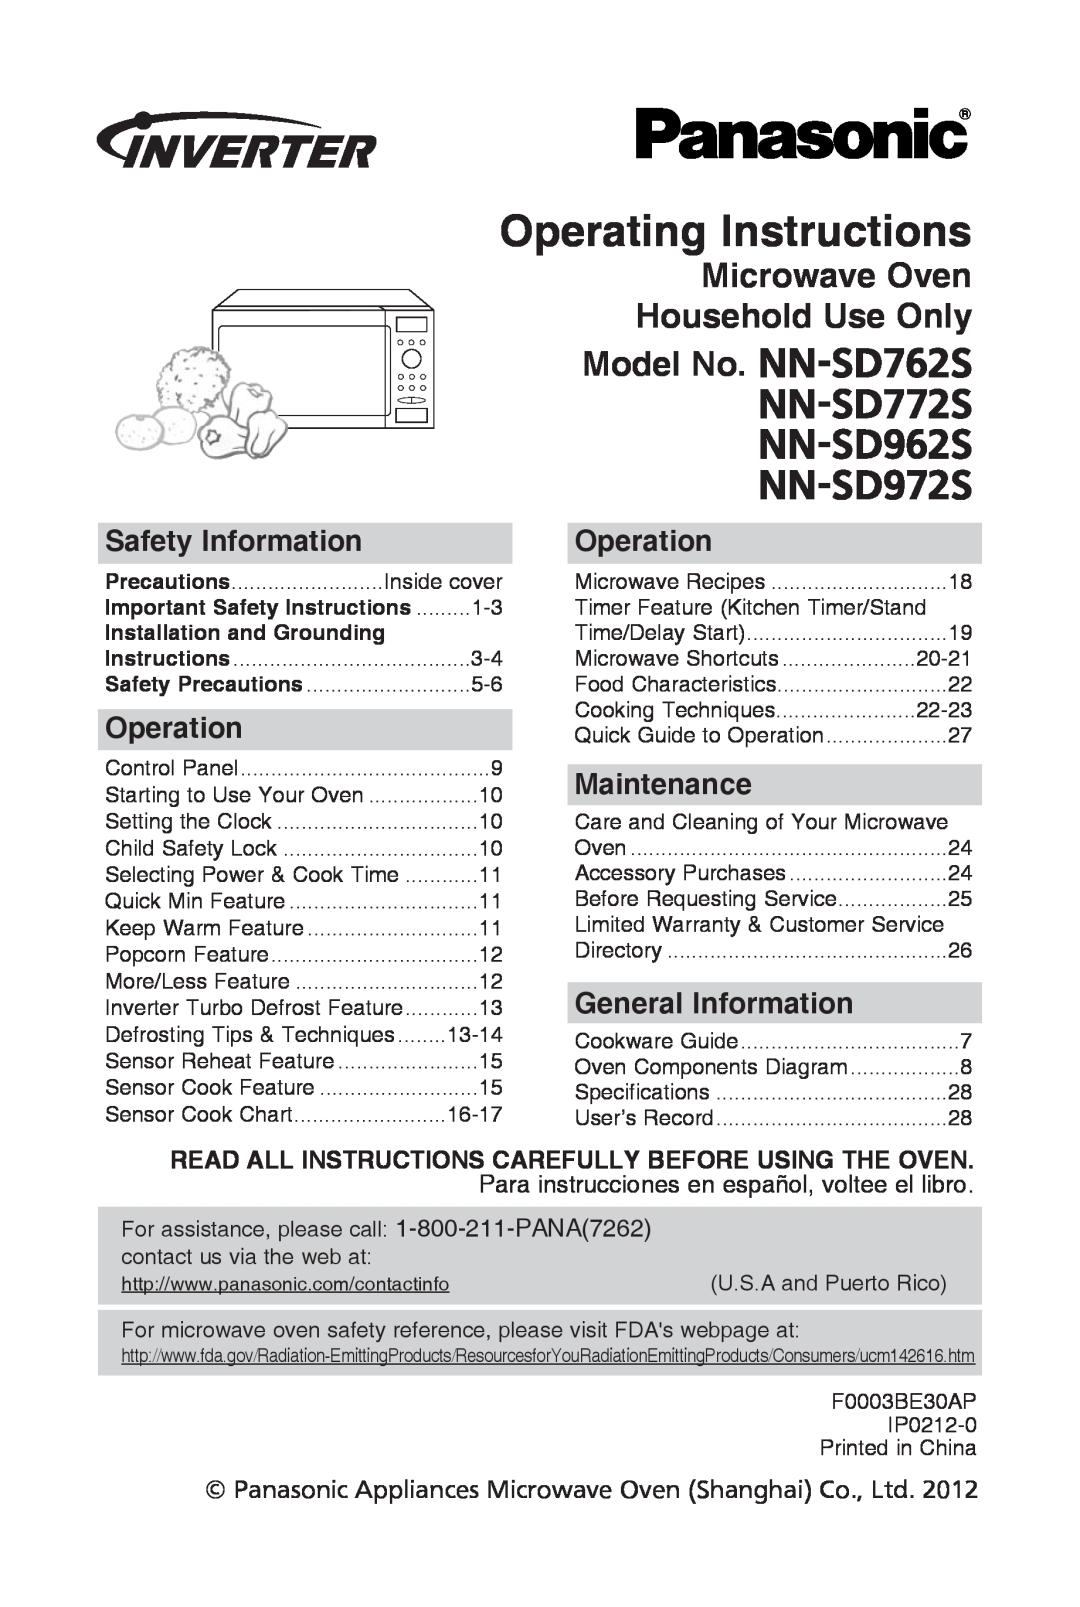 Panasonic warranty operating instructions, Model no. NN-SD762S NN-SD772S NN-SD962S NN-SD972S, safety information 